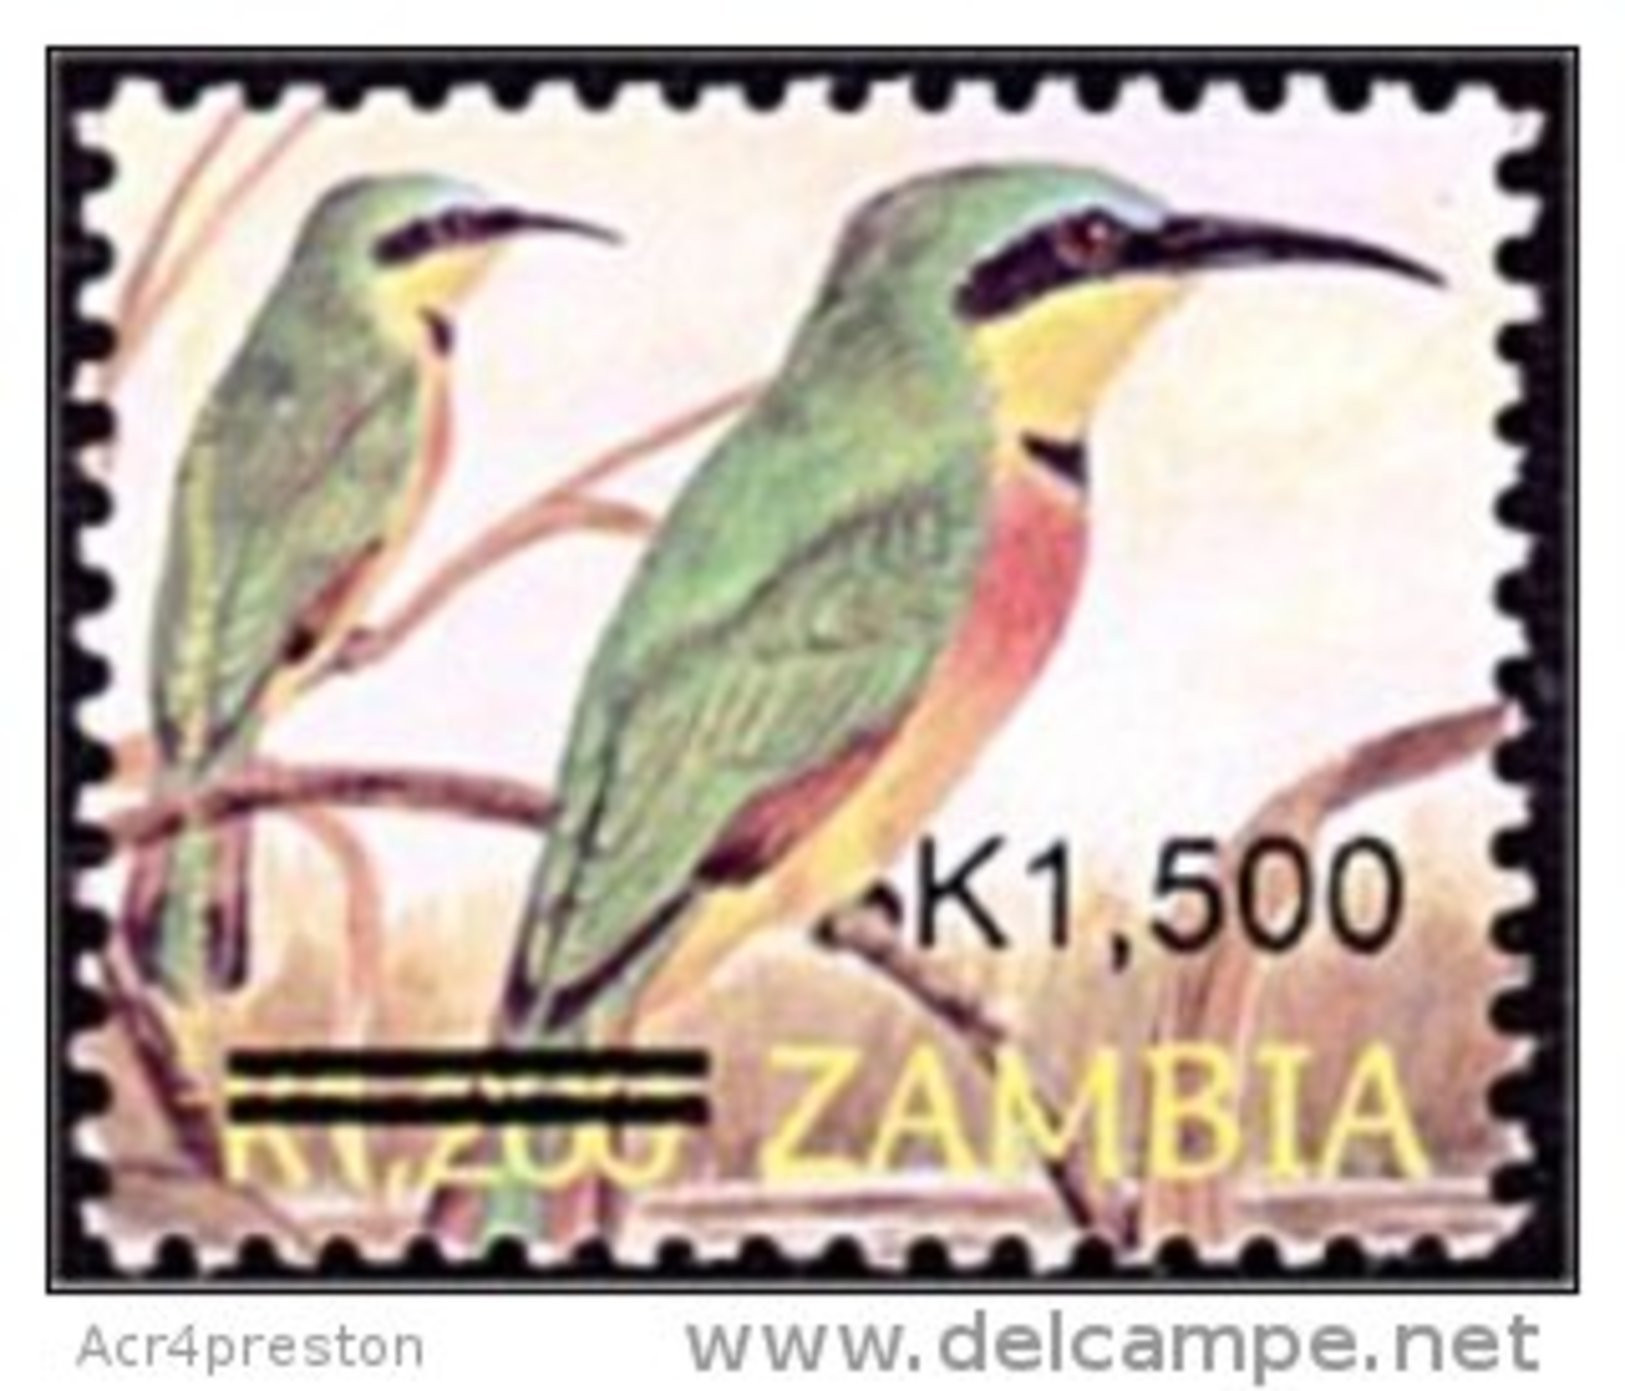 Zm1025 Zambia 2007, SG1025, K1,500 Surcharge On K1,200 Small Format Birds - Zambia (1965-...)